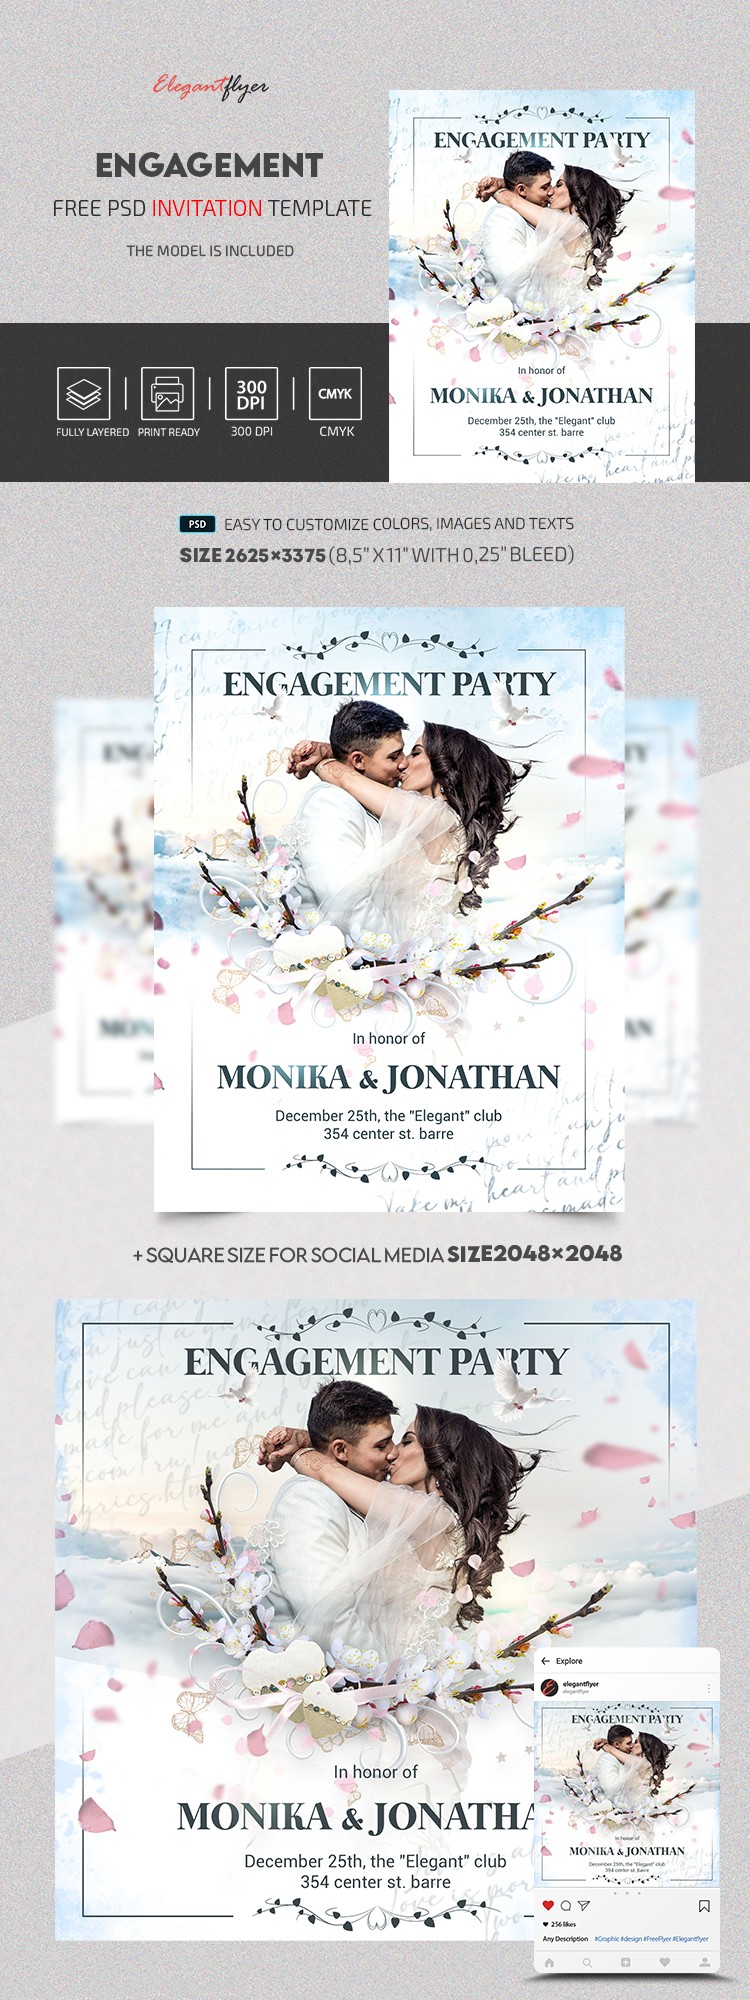 Engagement Party by ElegantFlyer